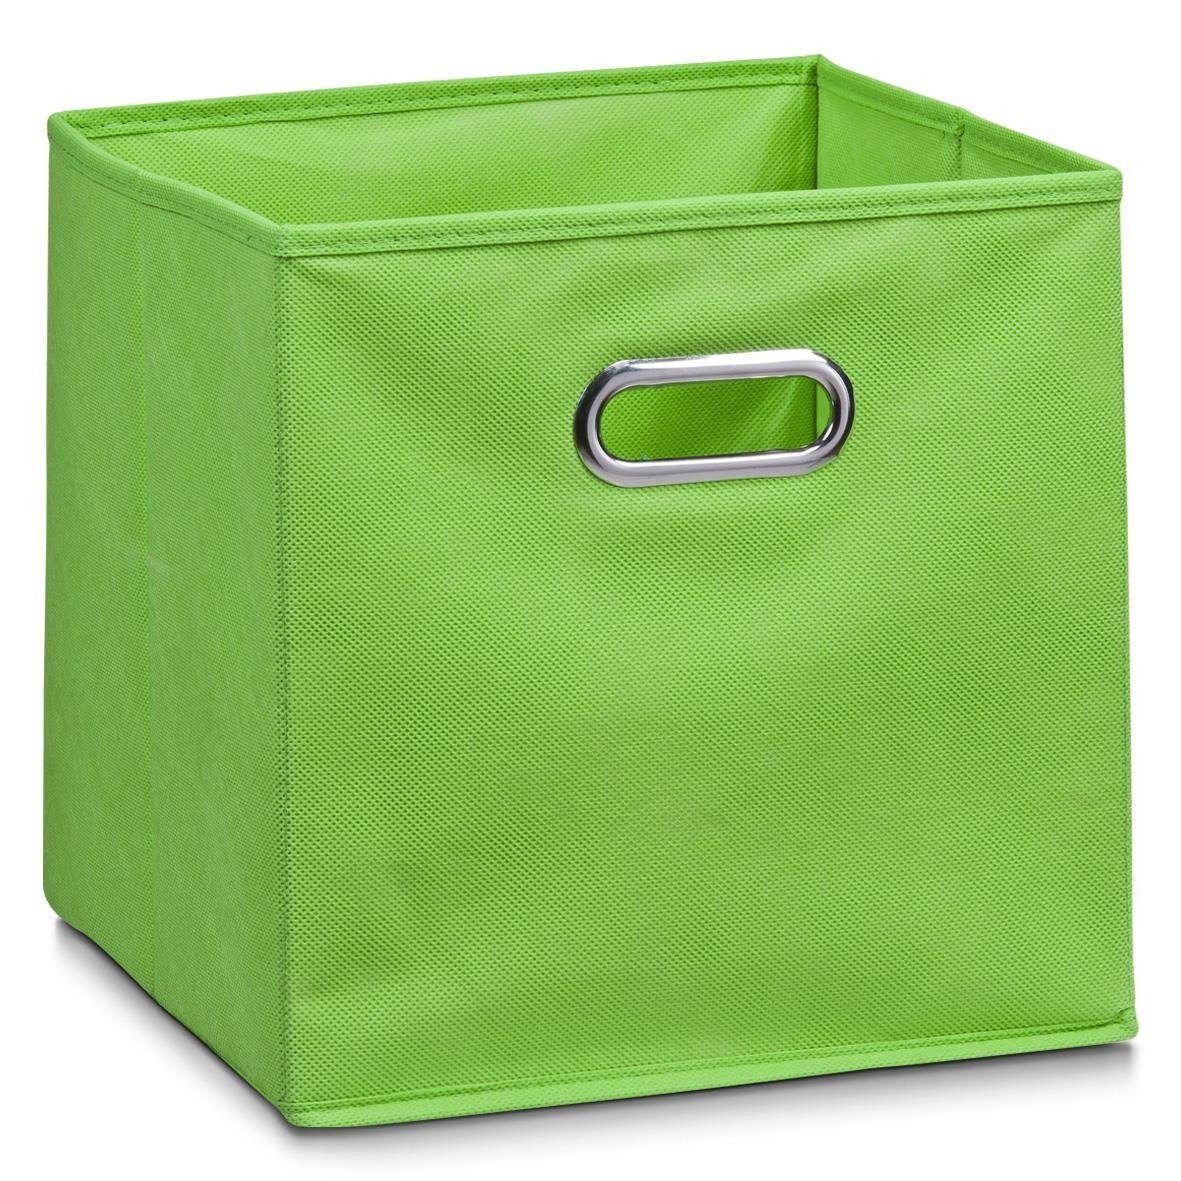 Present grün Zeller Aufbewahrungsbox